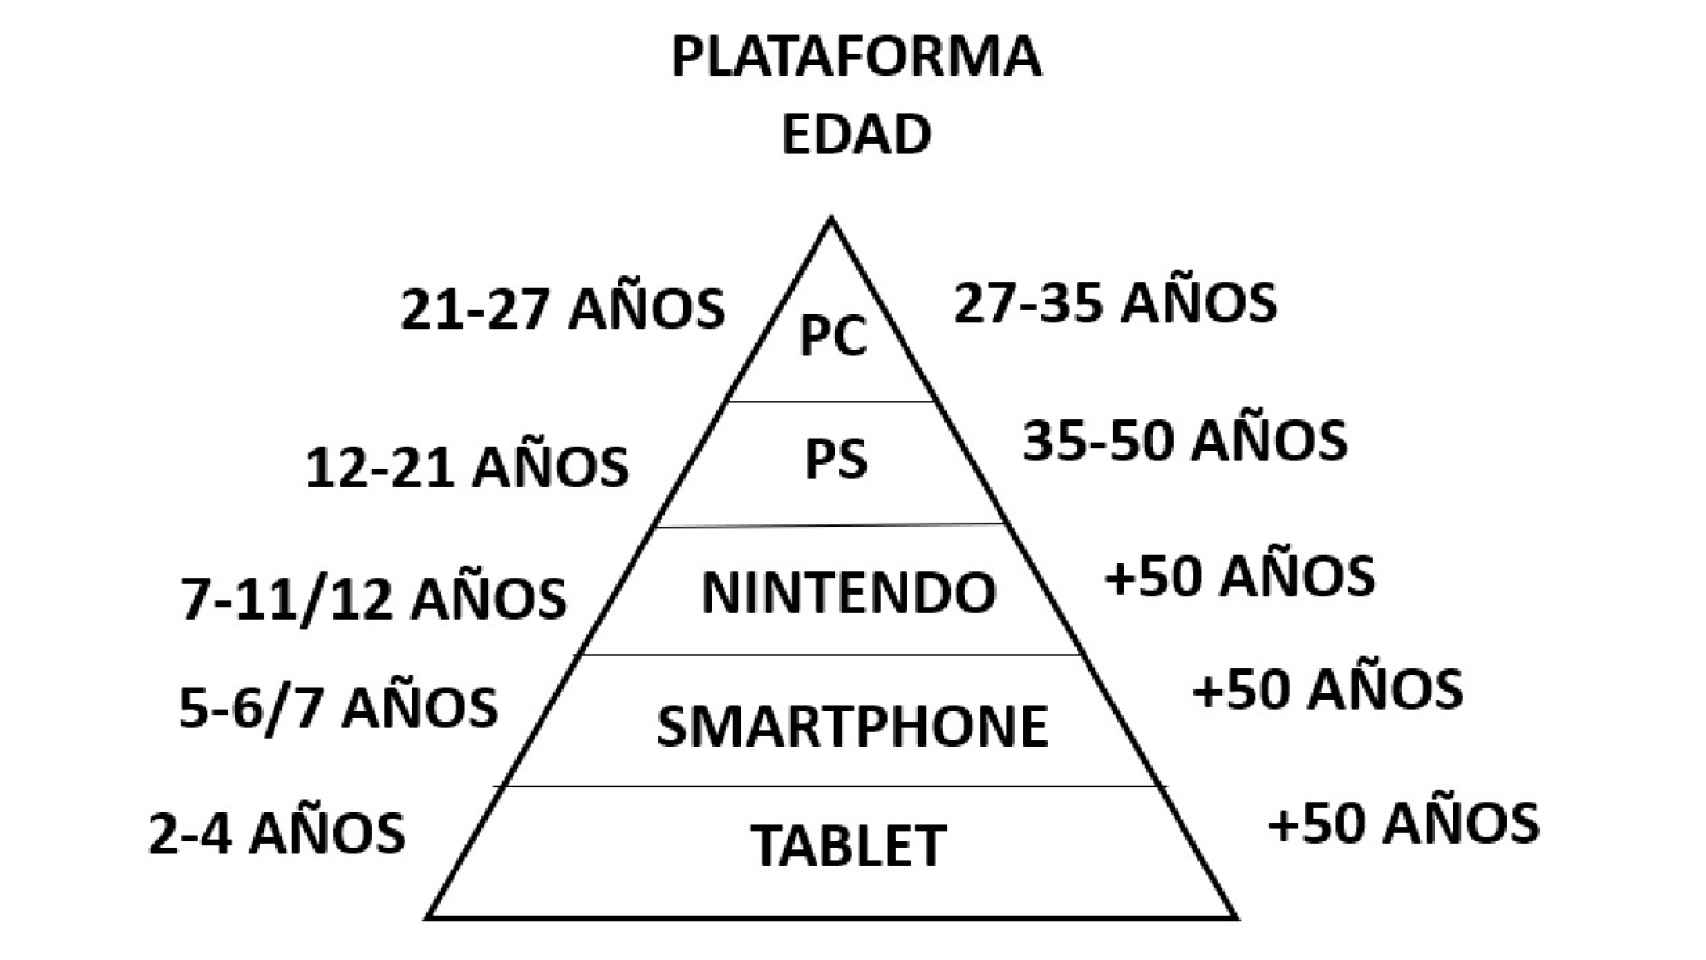 La pirámide de la Edad vs. Plataforma